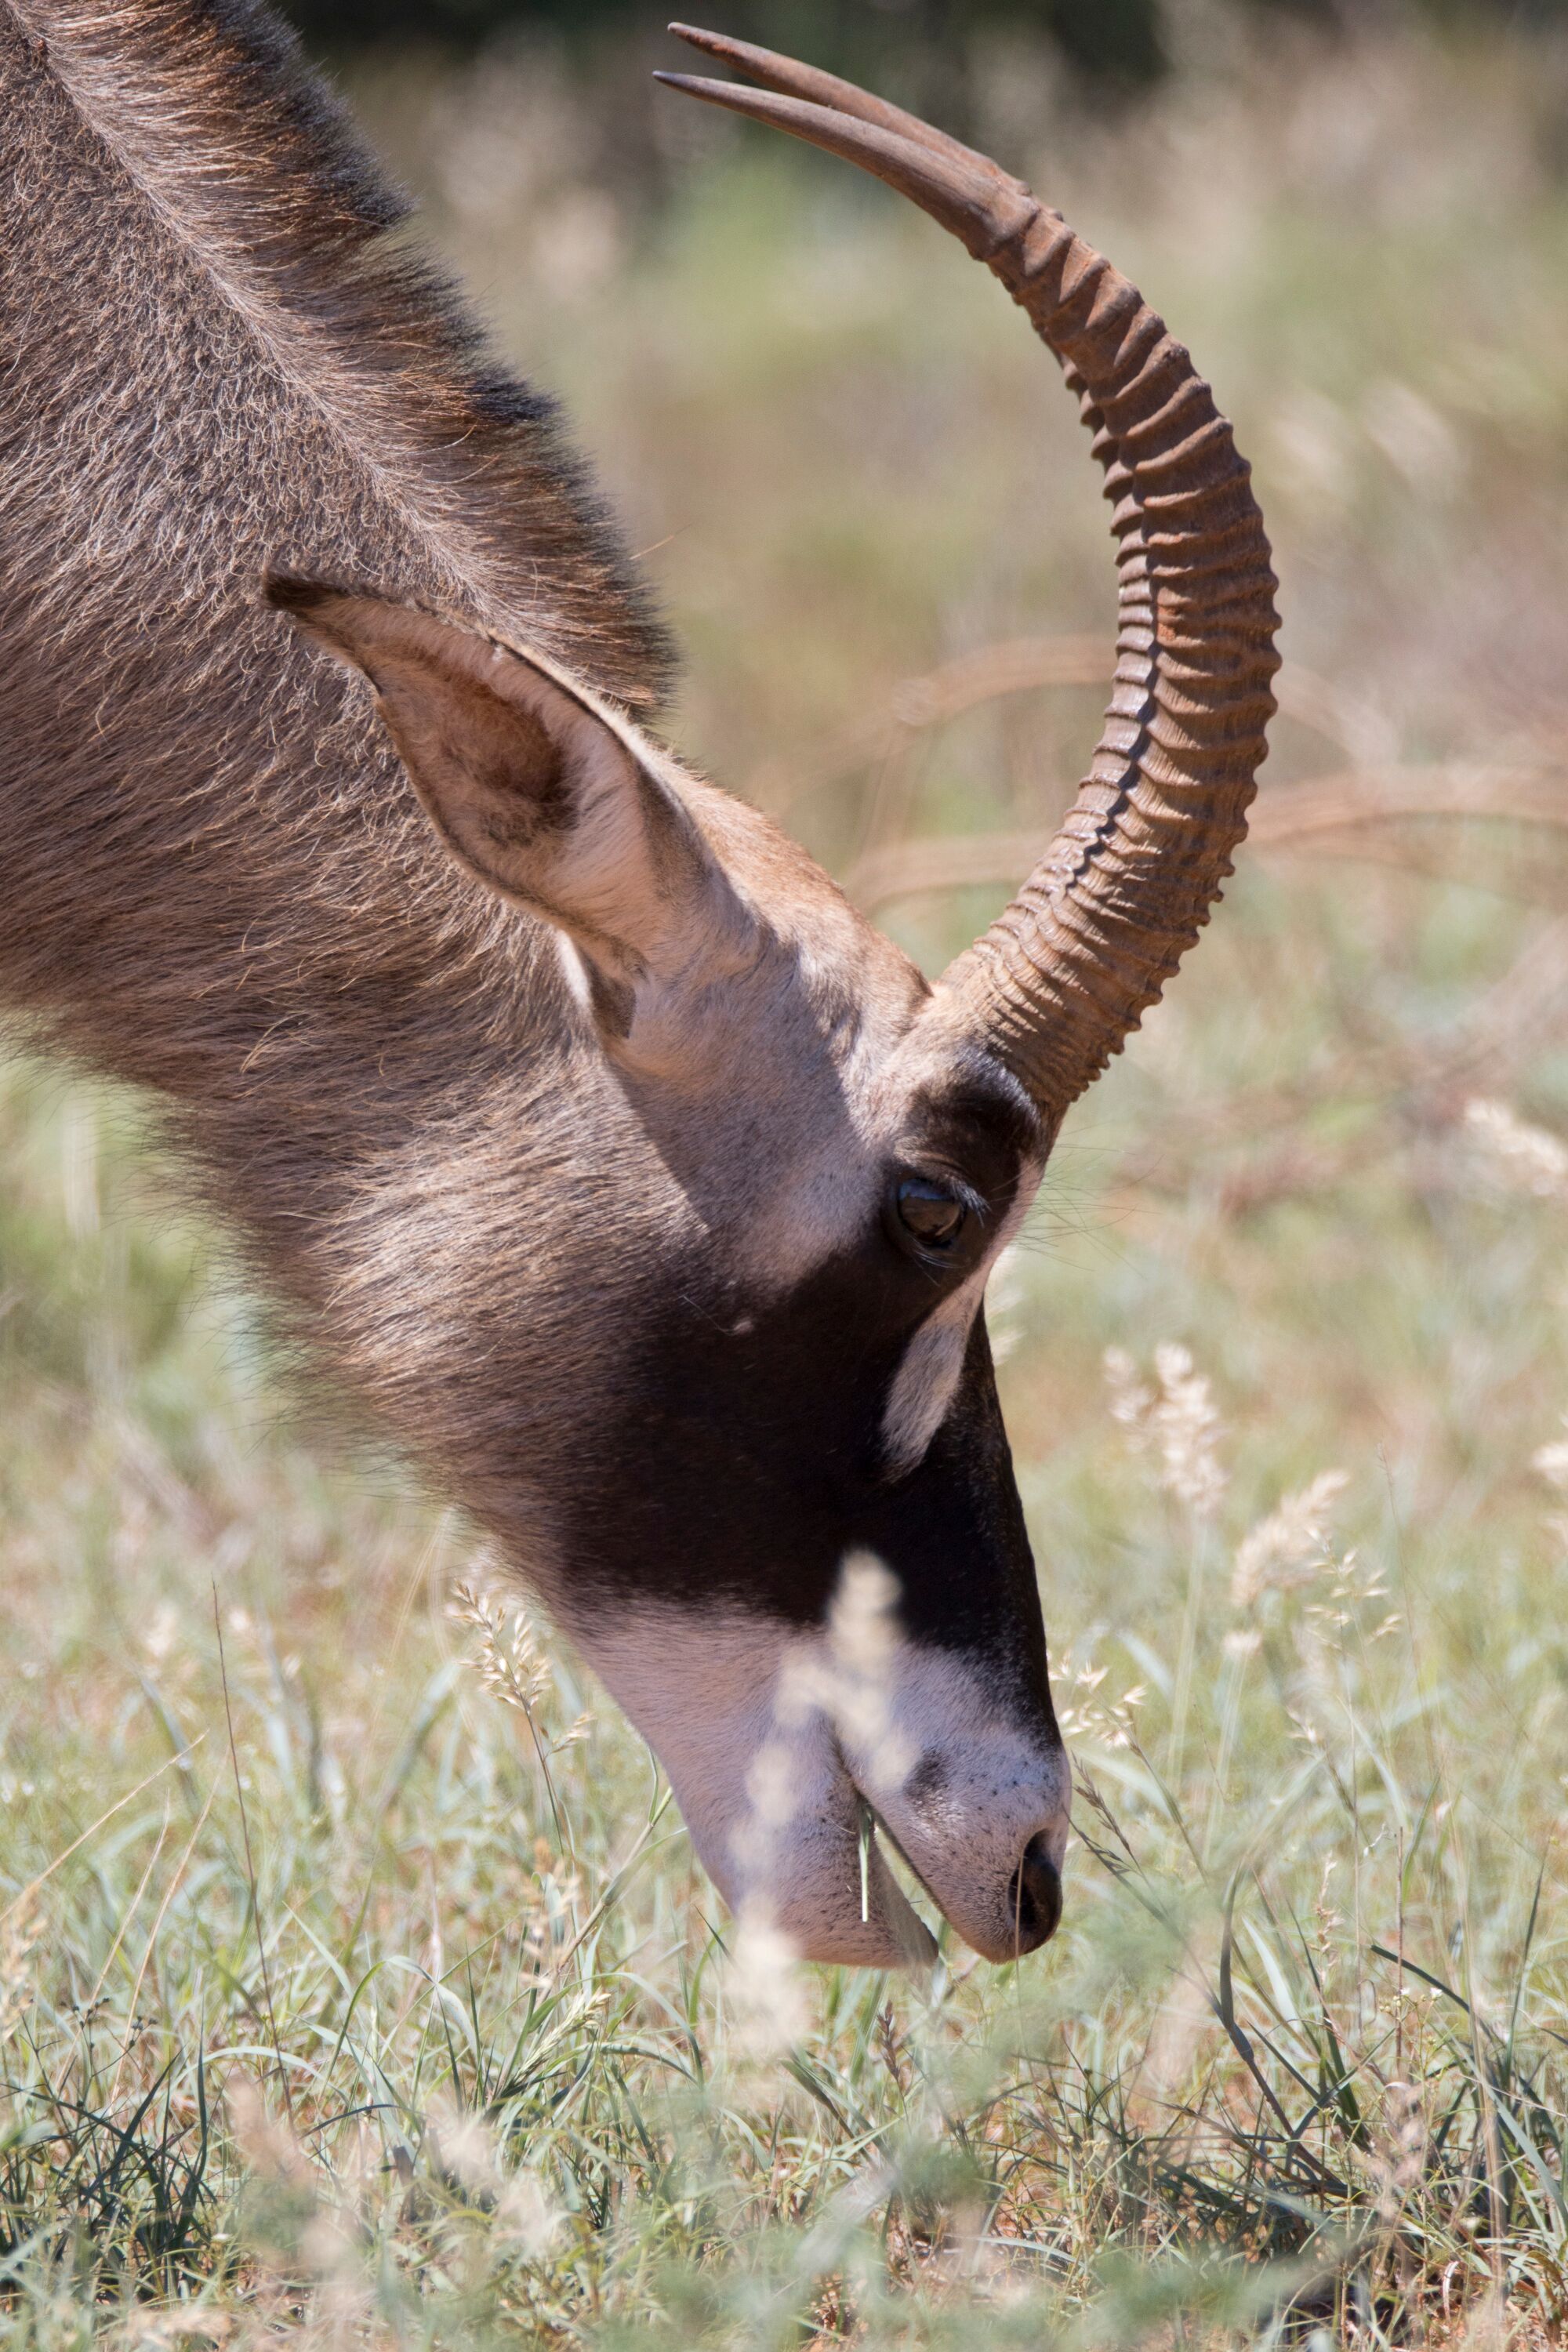 Sable antelope, African Mammal, Conservation Status & Habitat